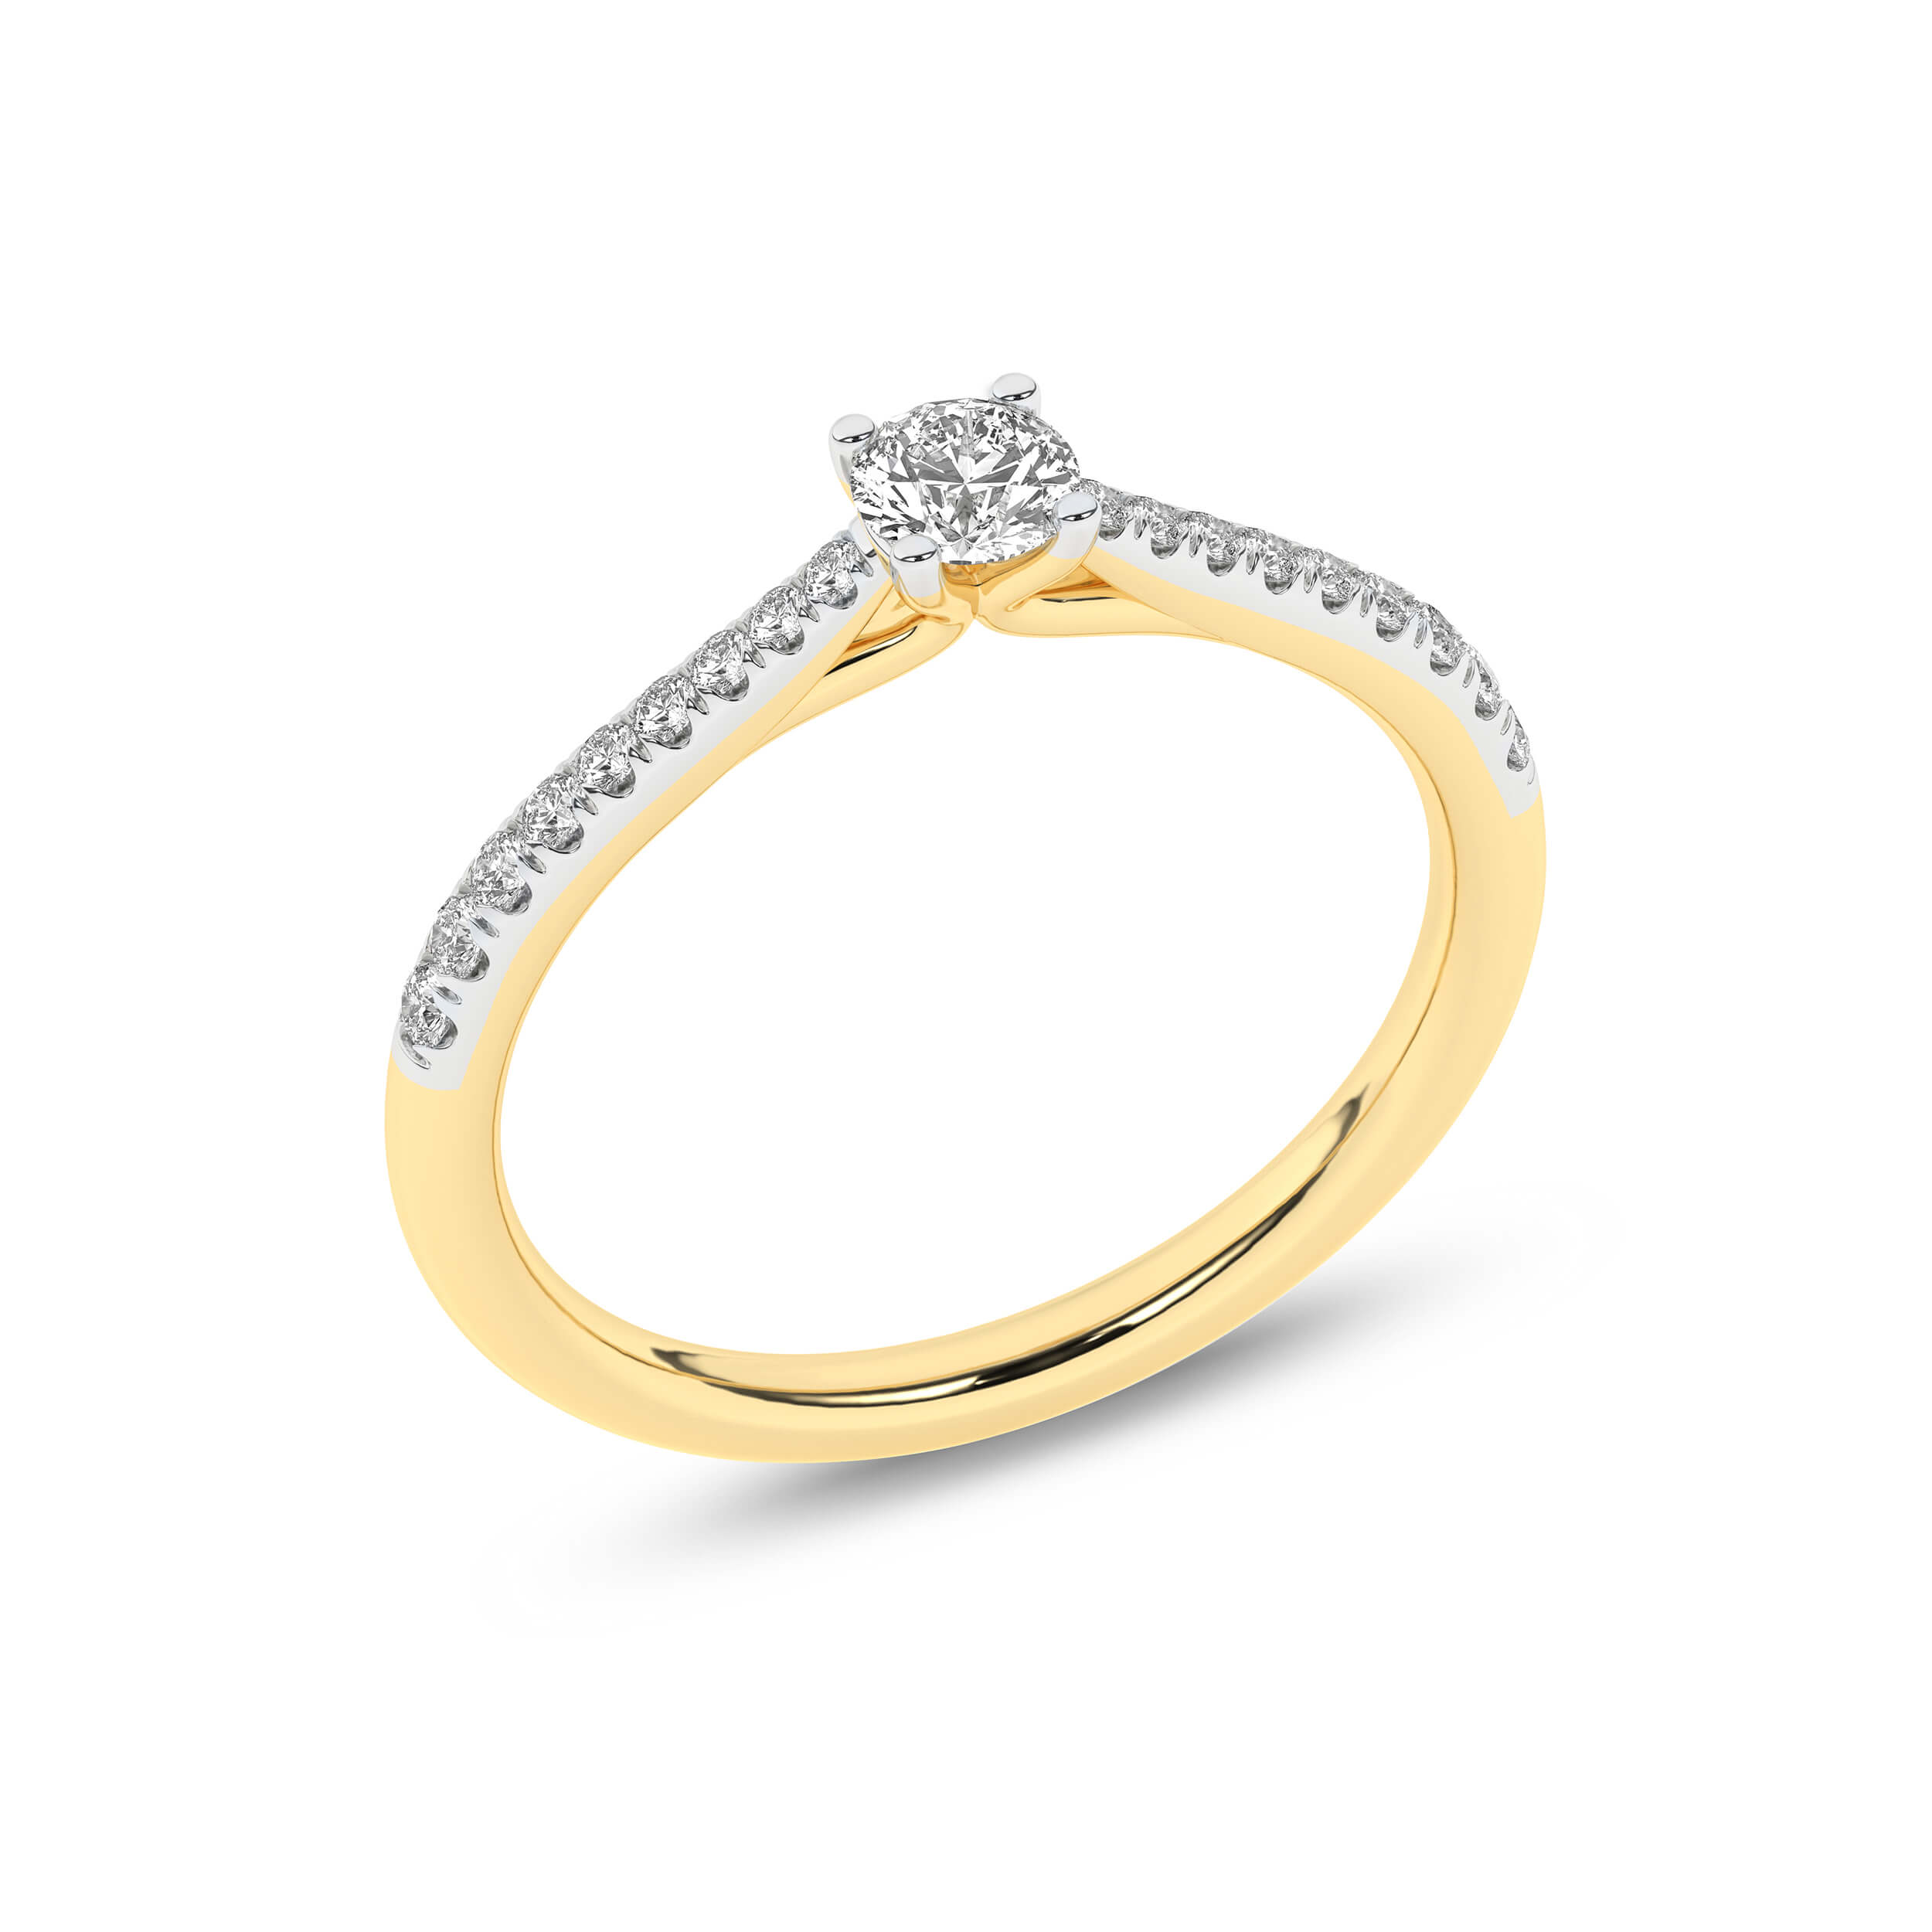 Inel de logodna din Aur Galben 14K cu Diamante 0.33Ct, articol RB21737EG, previzualizare foto 4